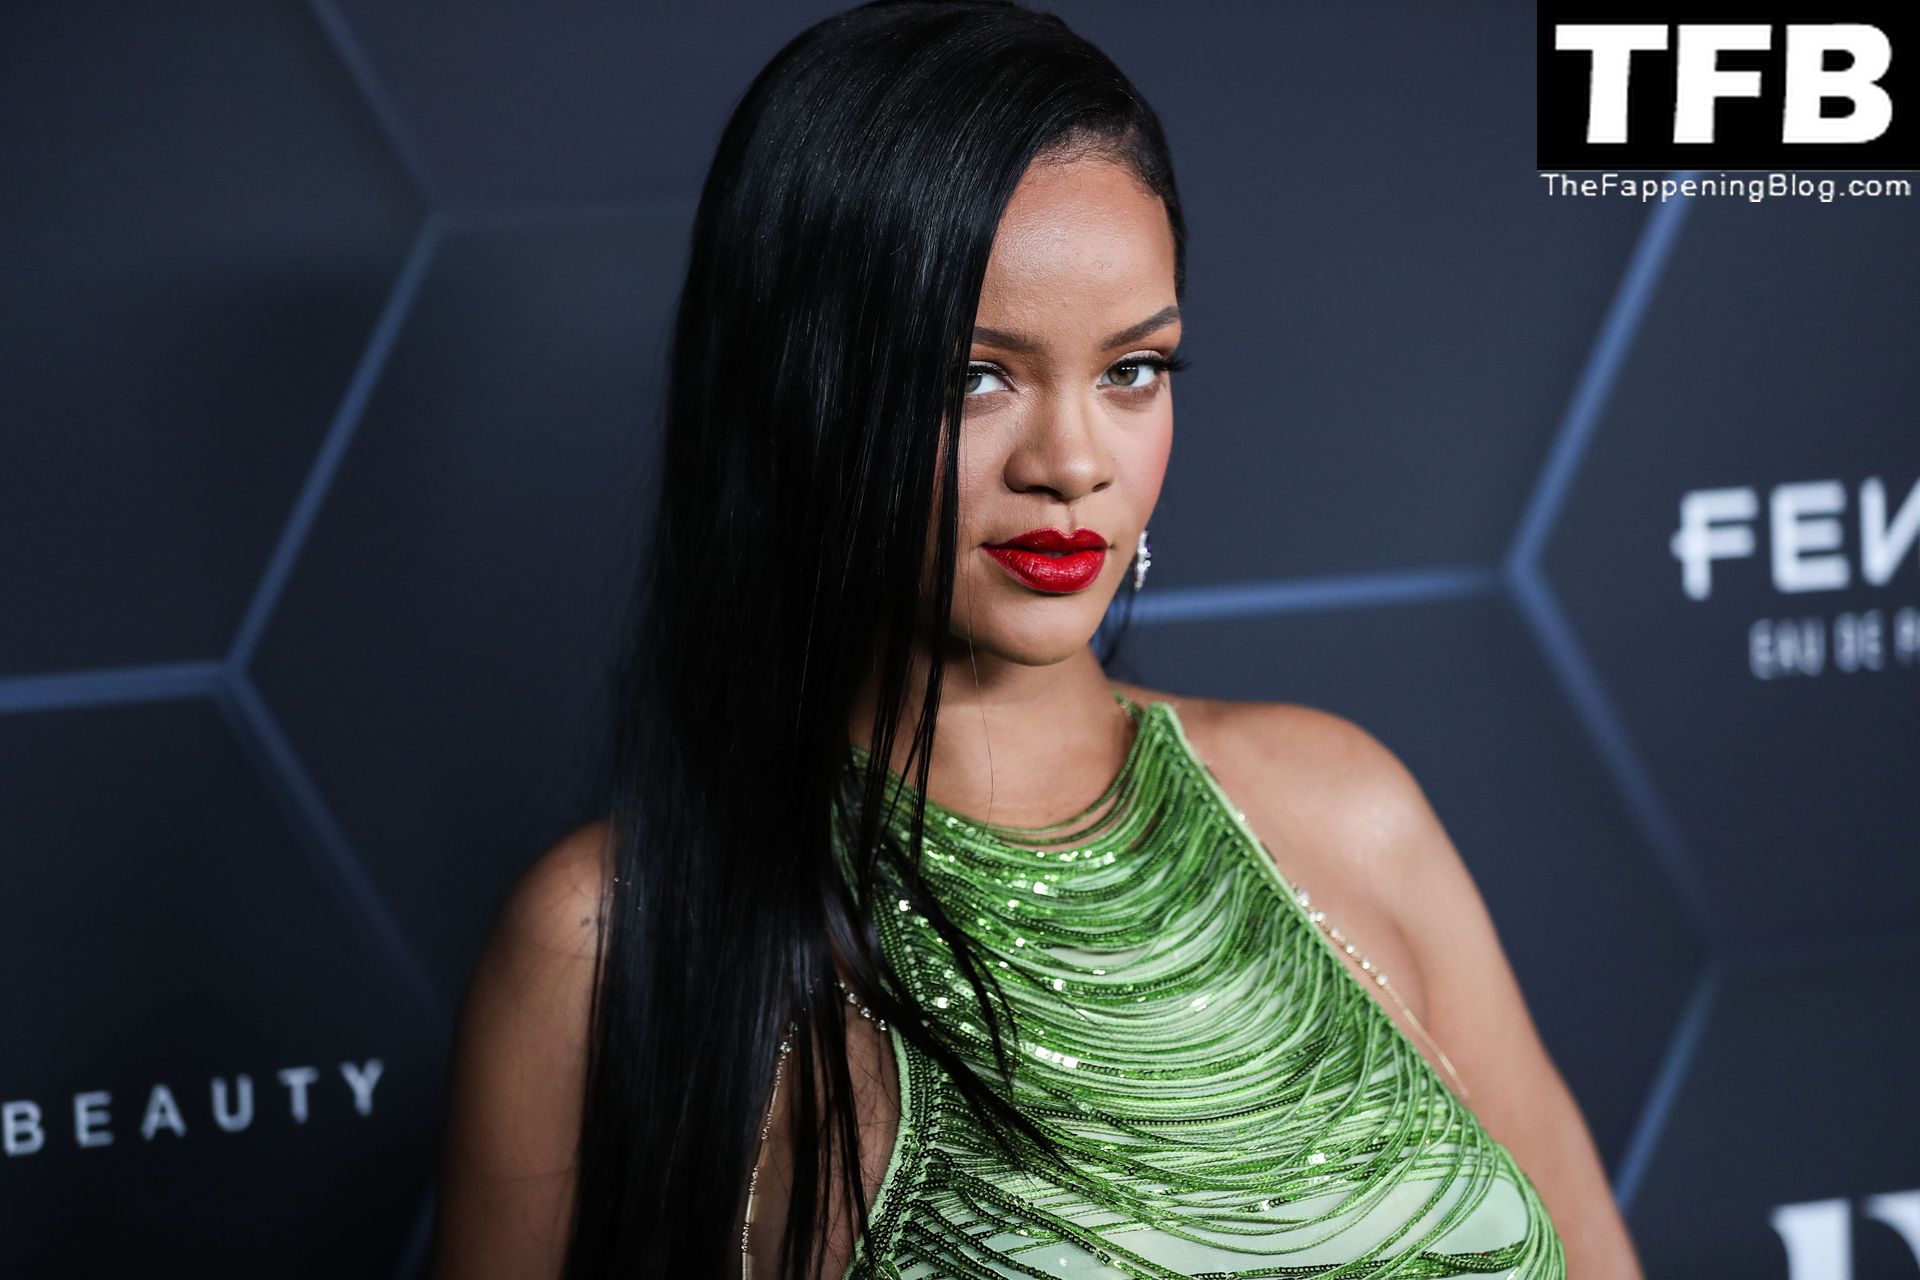 Rihanna-Sexy-The-Fappening-Blog-85.jpg